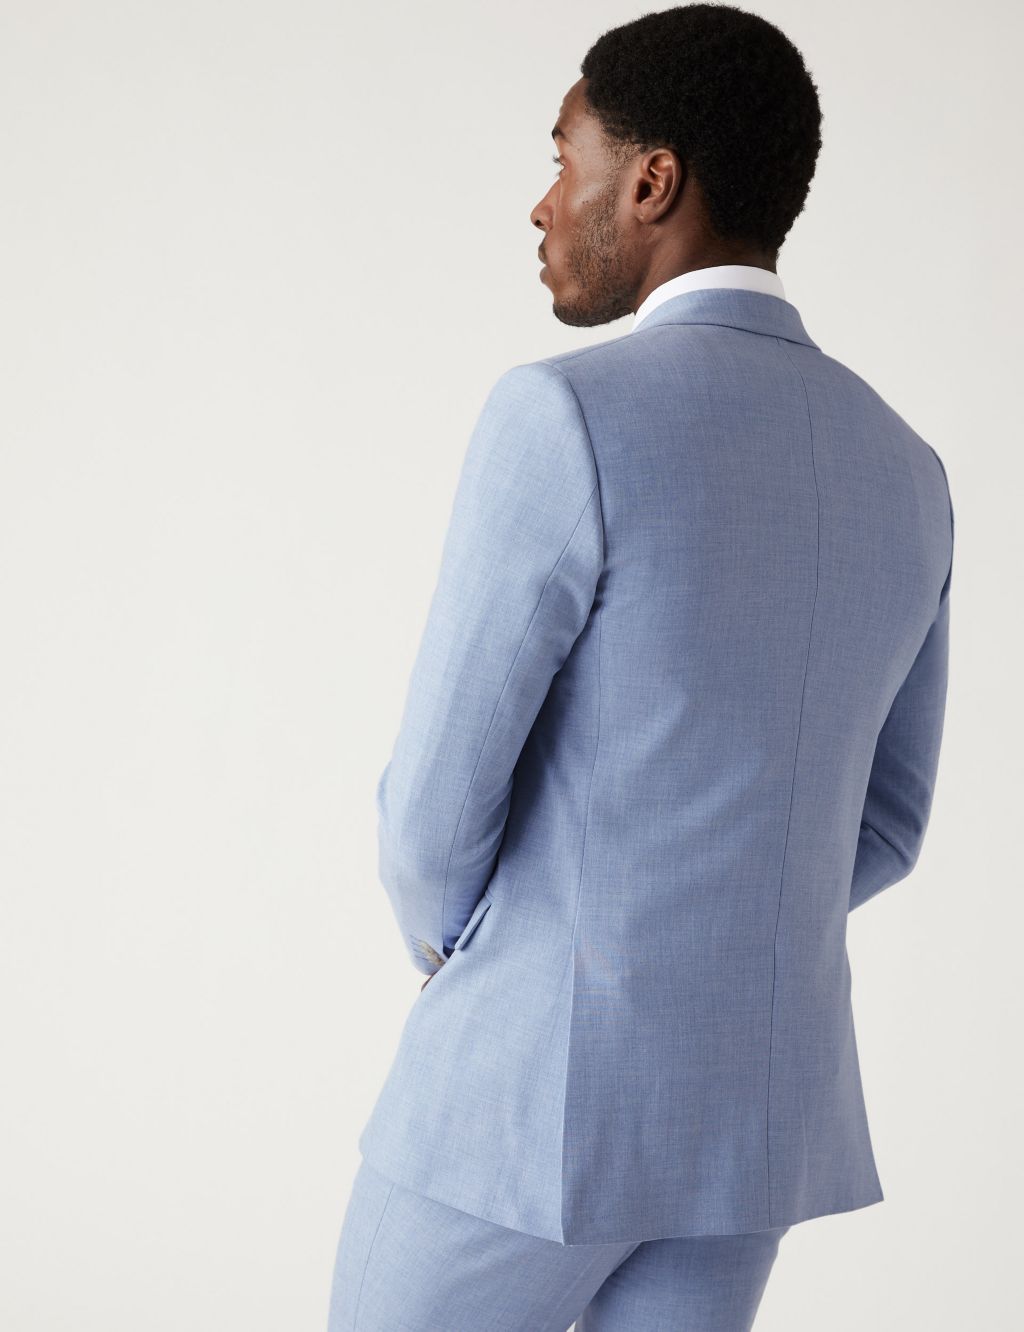 Slim Fit Marl Stretch Suit image 3